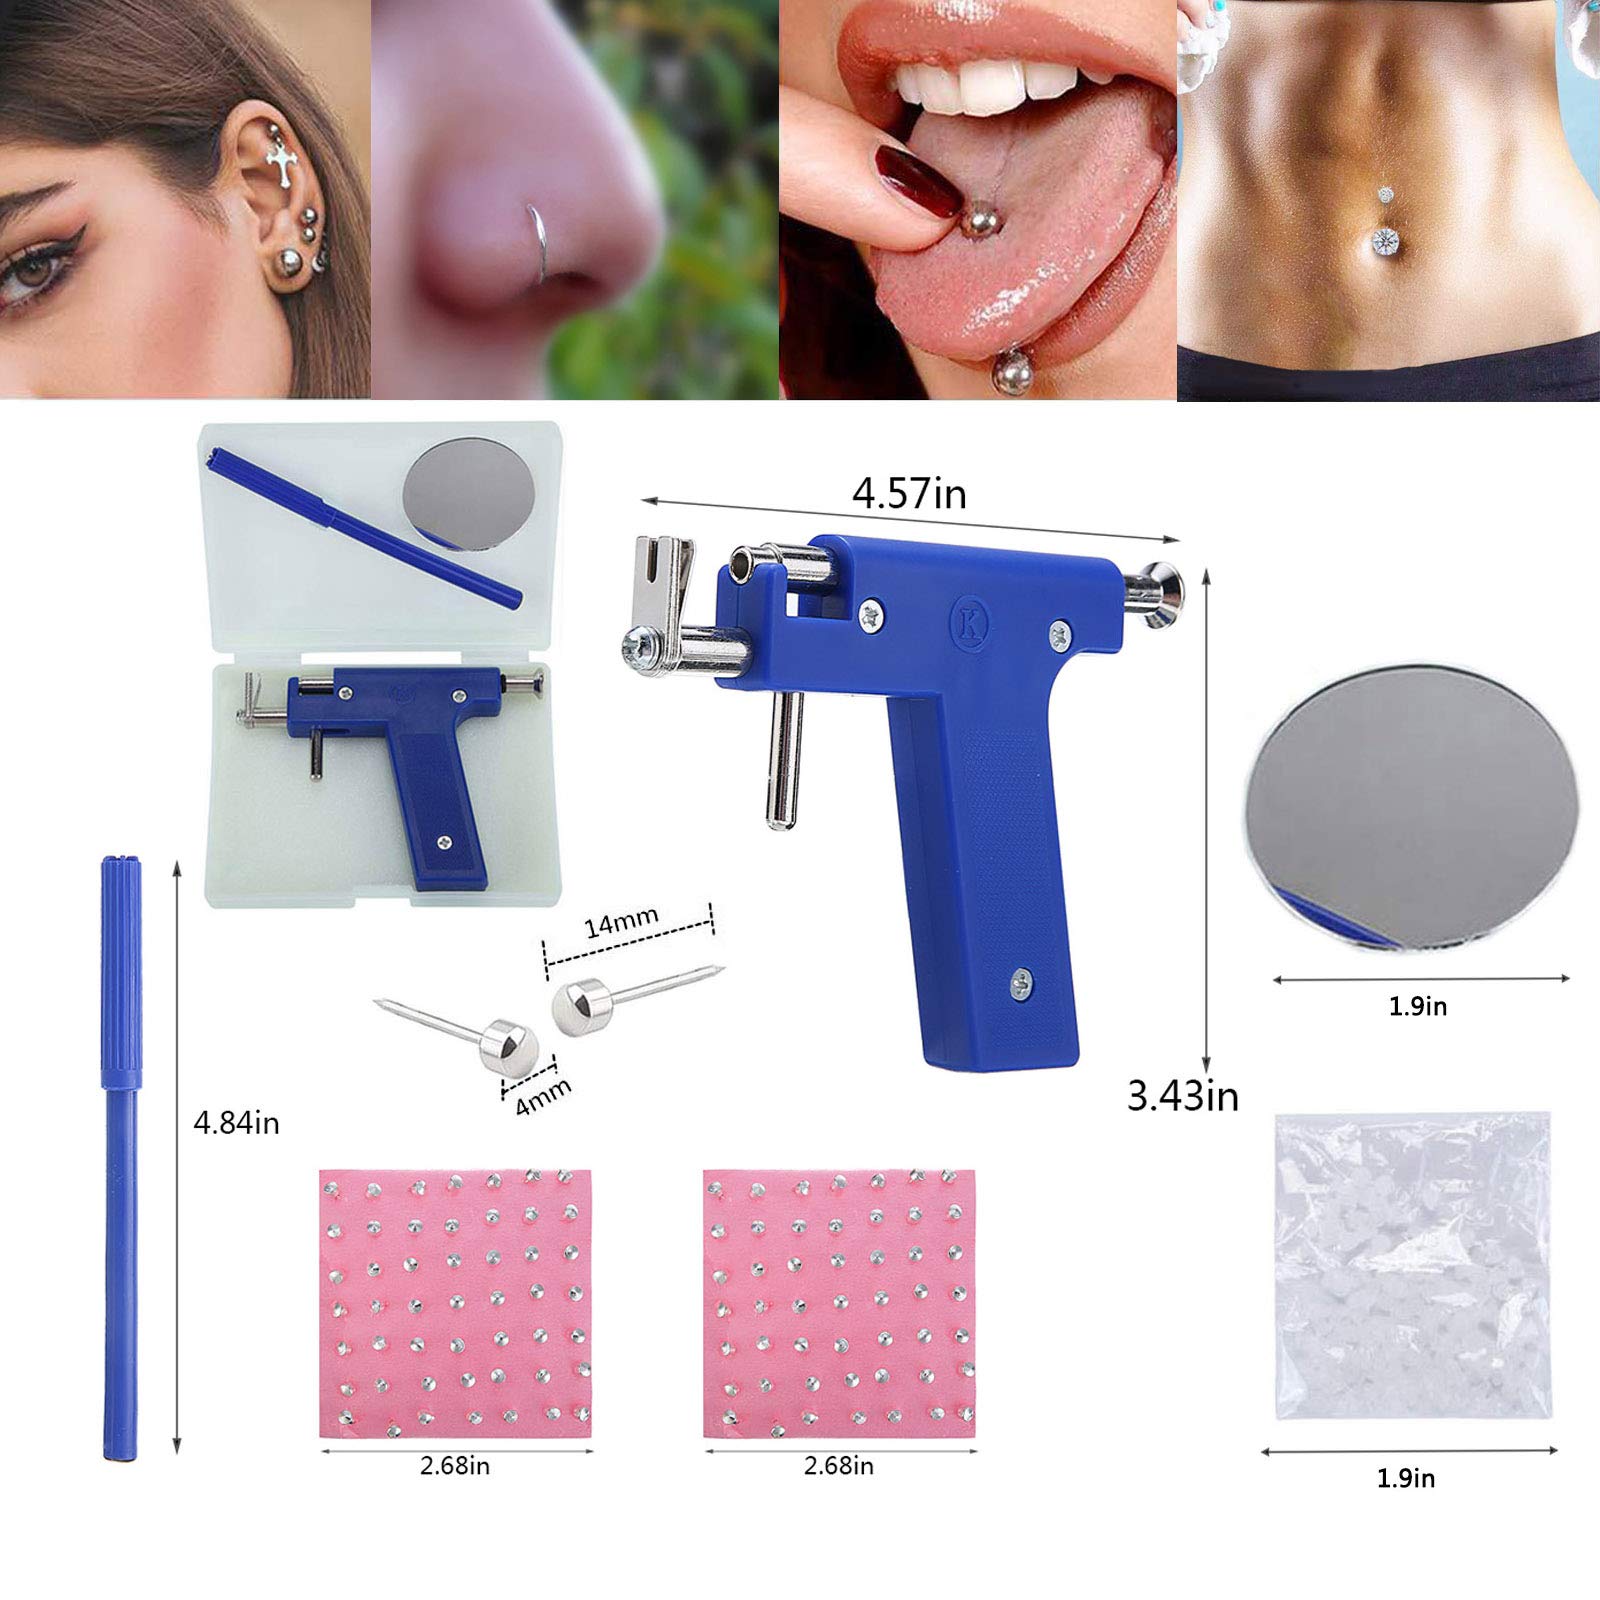 Ear Piercing Tool Kit, Earring Pericings Gun Tools Set,98Pcs Ears Nose Navel Lip Piercer Machine Studs, Stainless Steel Body Hole Peircing Peicing Guns Stud Earrings For Salon Home Pearcings Kits